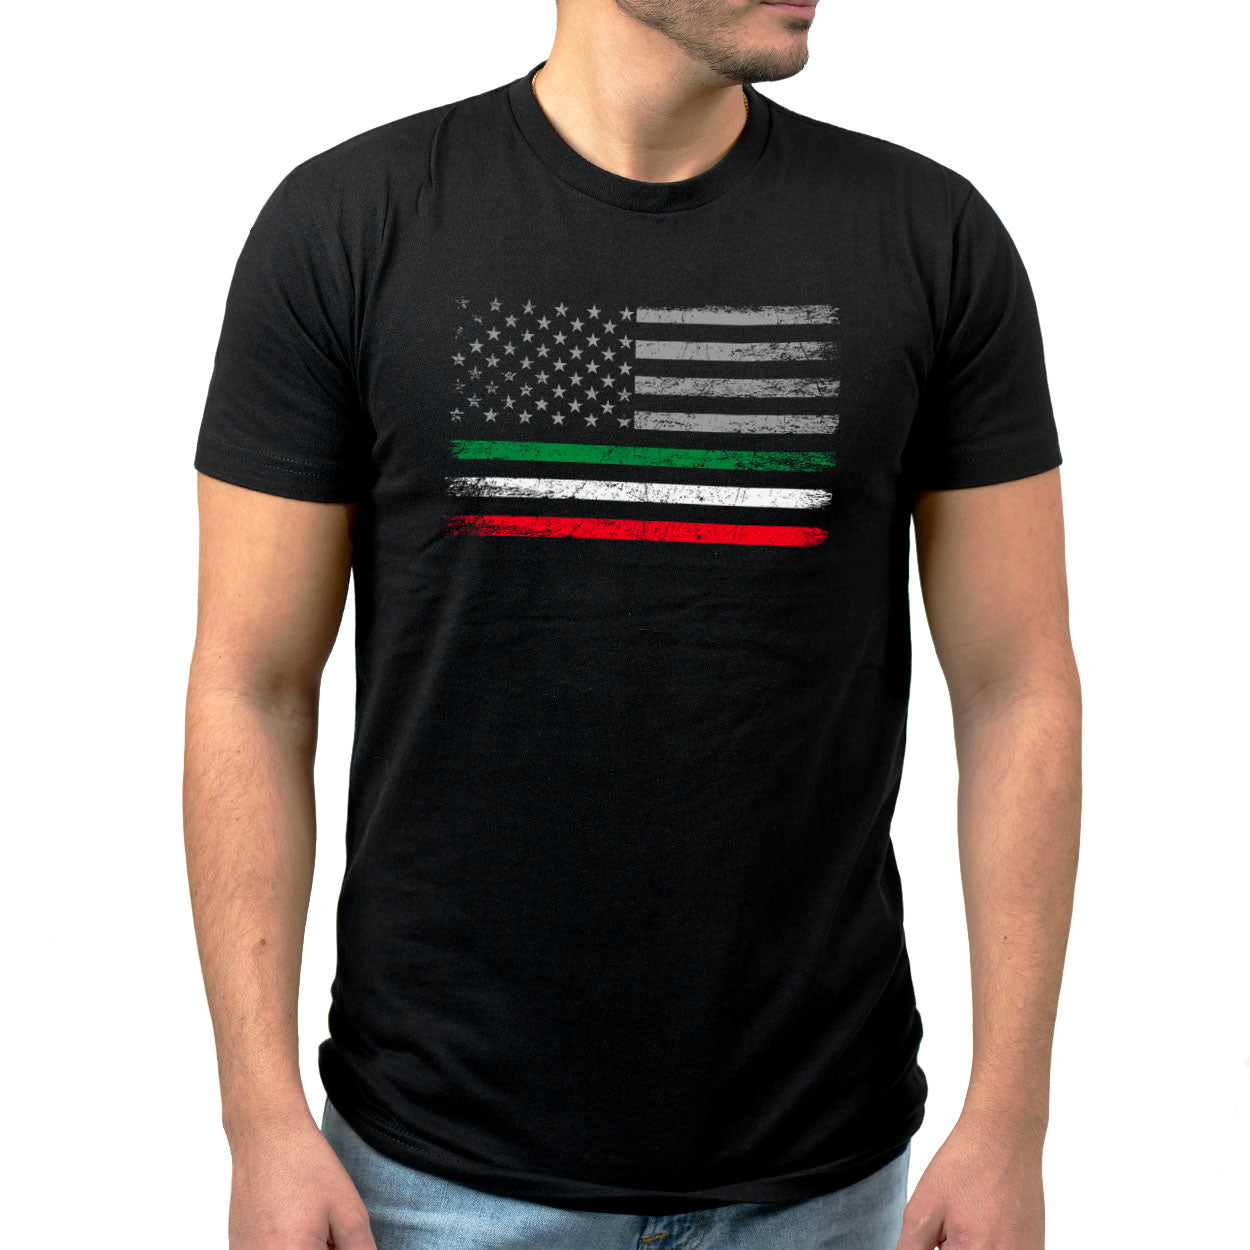 Italian-American Flag Tee